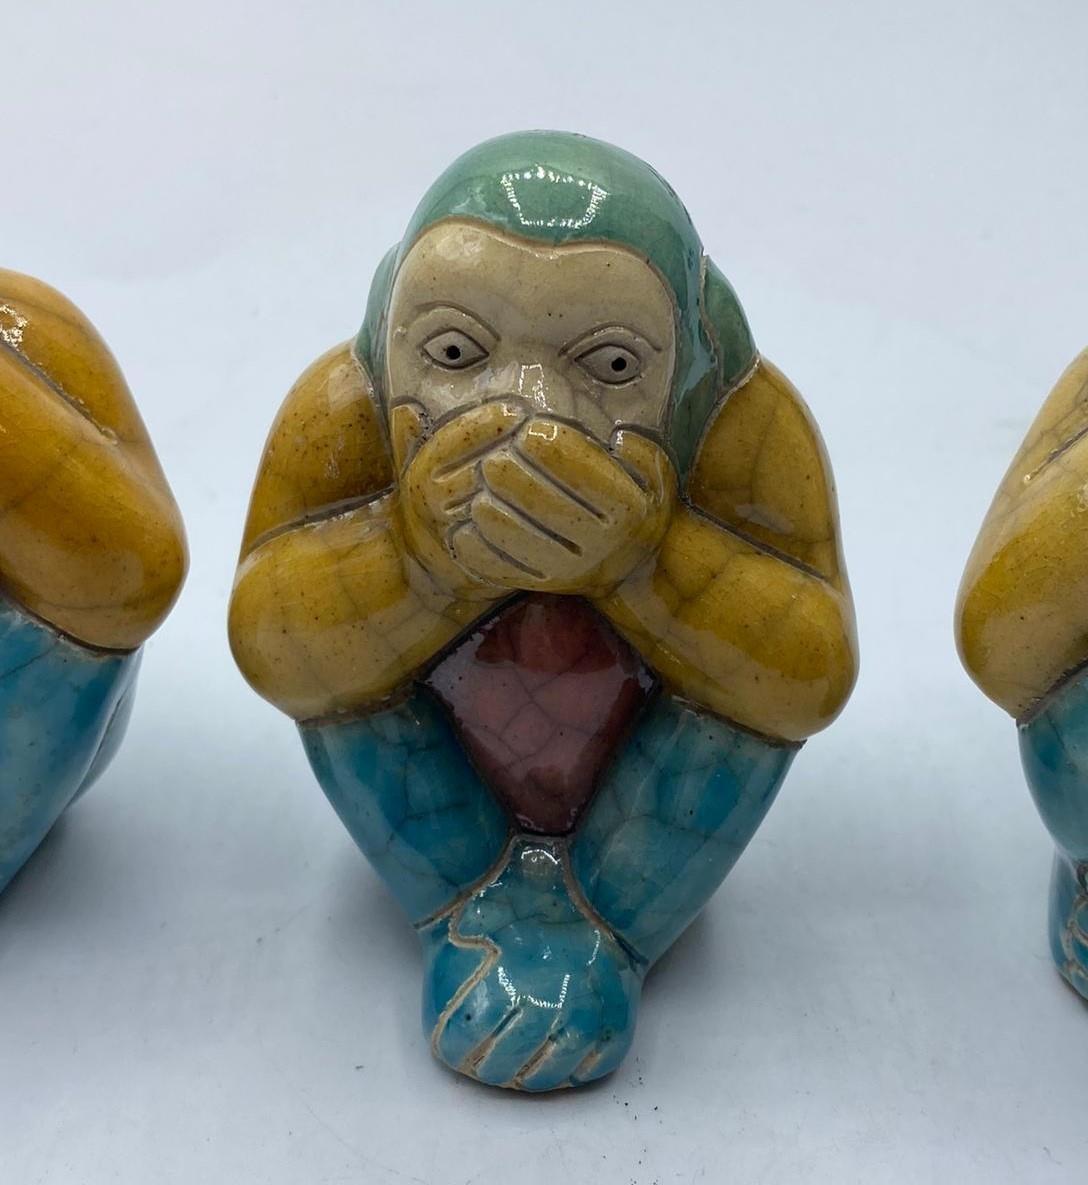 3x vintage ceramic monkeys, See no evil-Hear no evil-Speak no evil, 9cm tall - Image 4 of 5